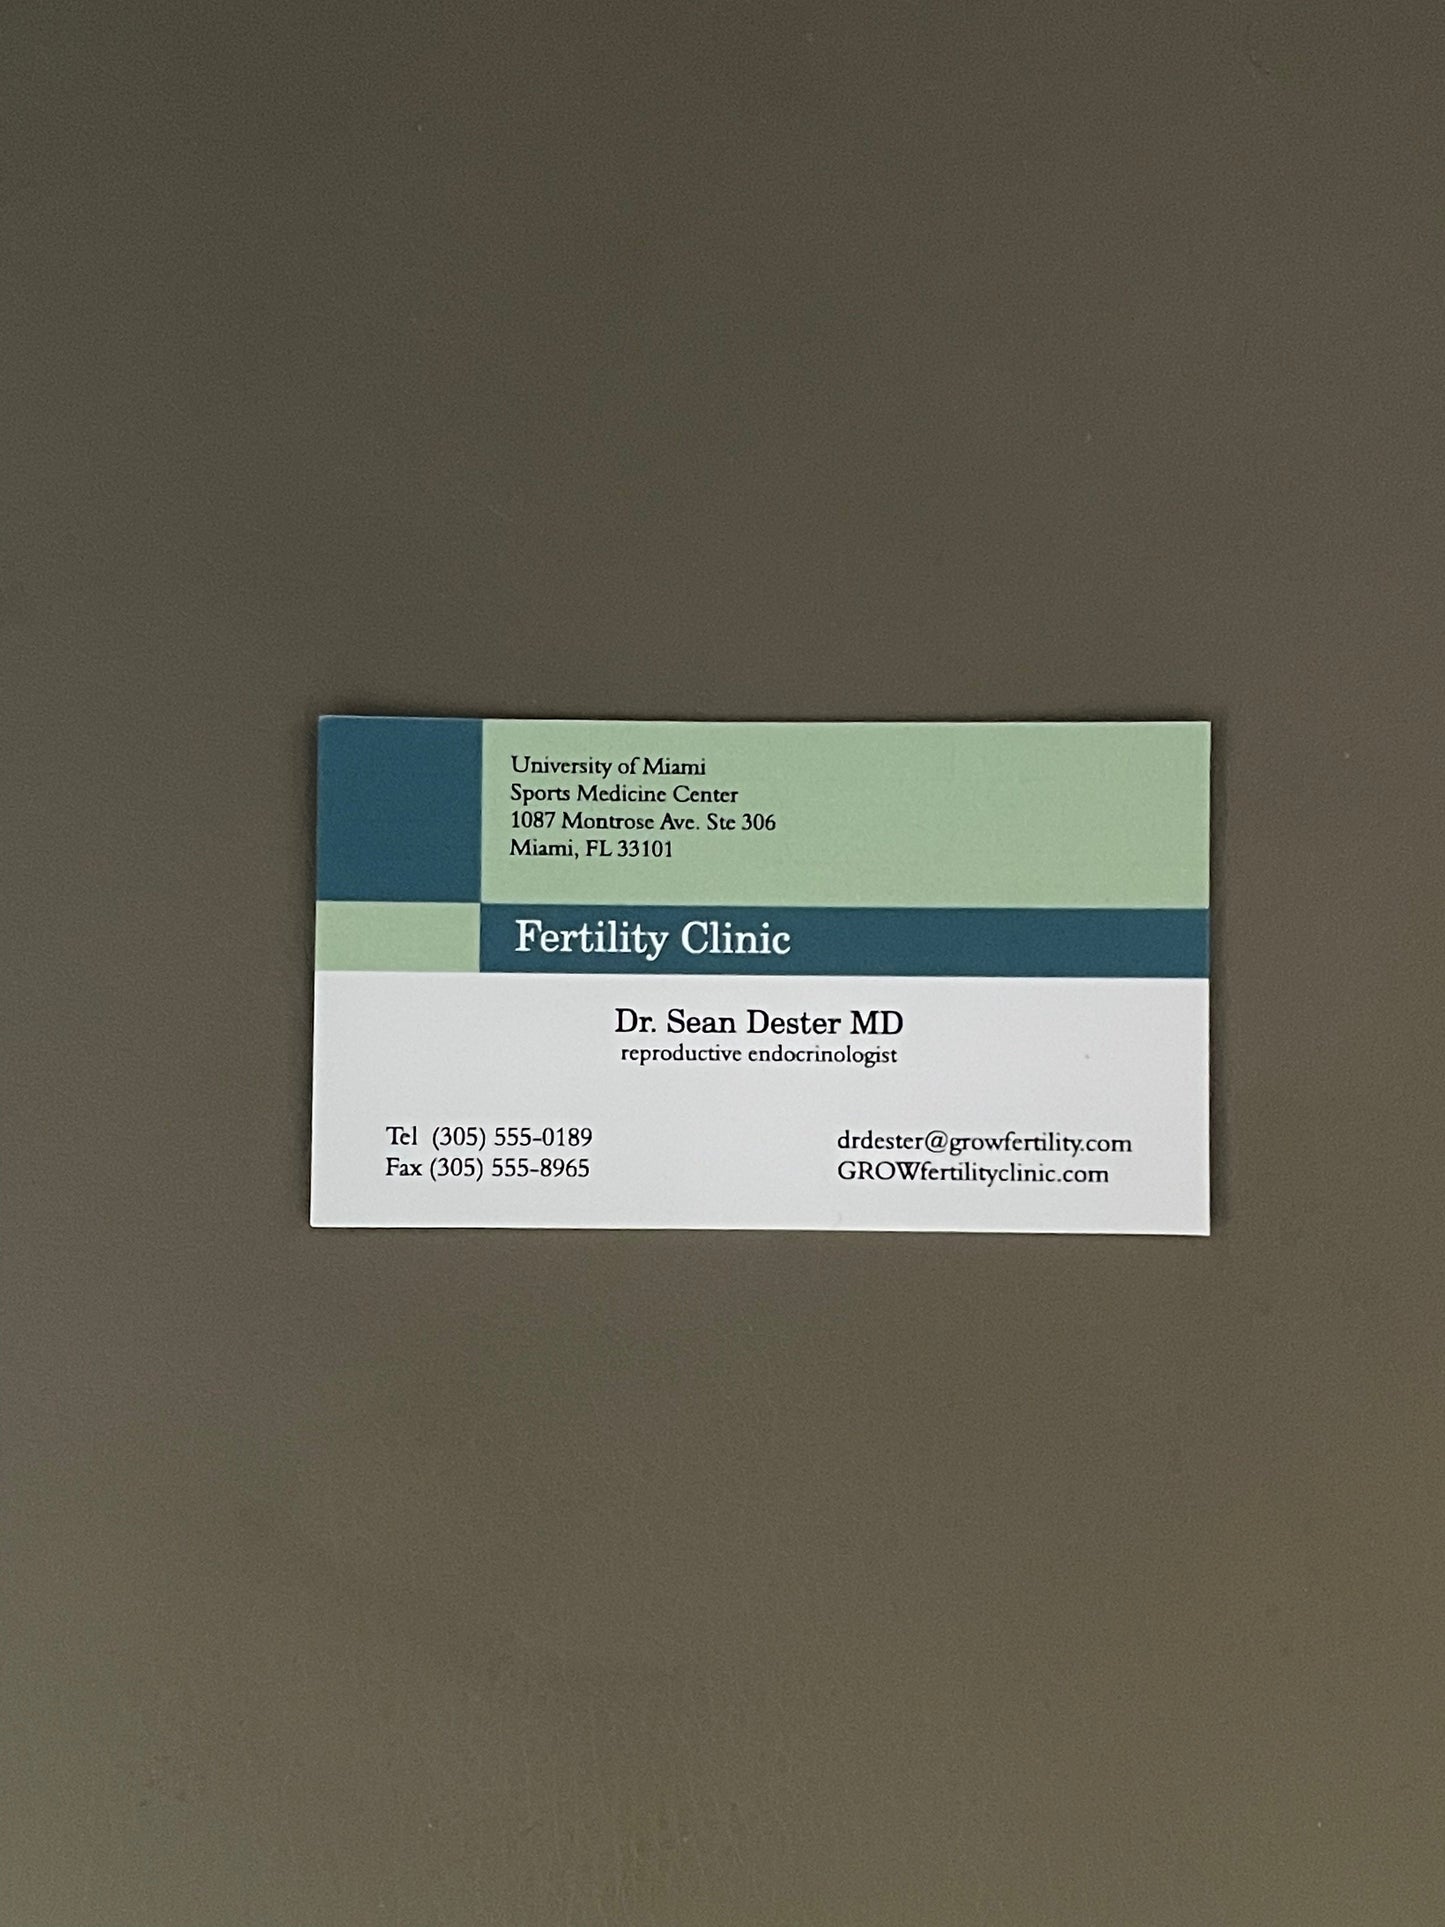 BALLERS: Dr. Sean Dester's Fertility Clinic Business Card